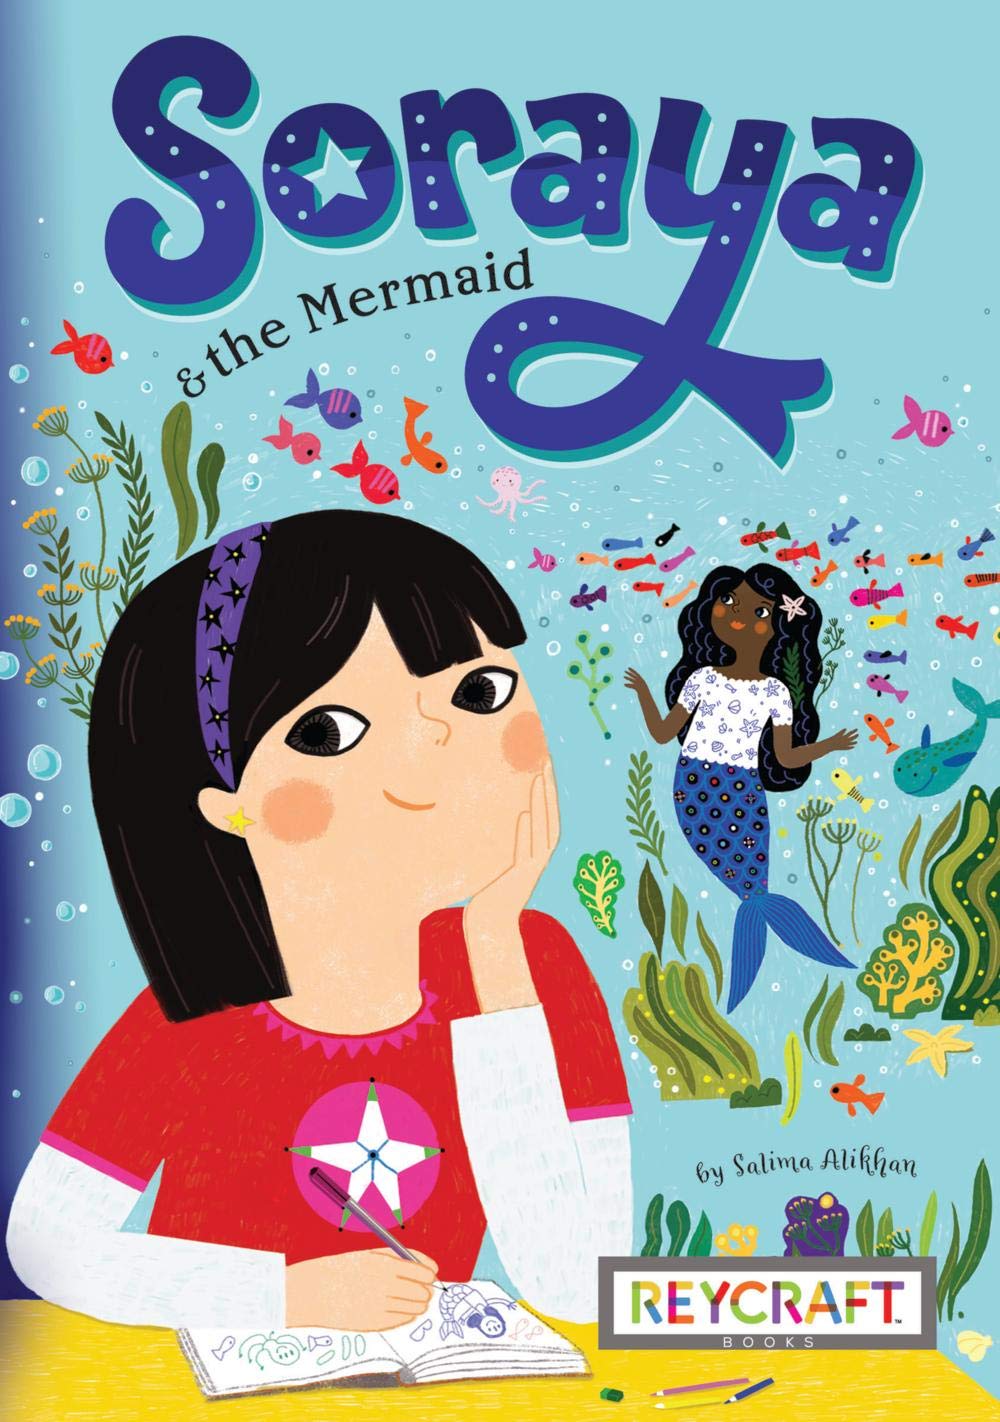 Soraya and the Mermaid book cover.